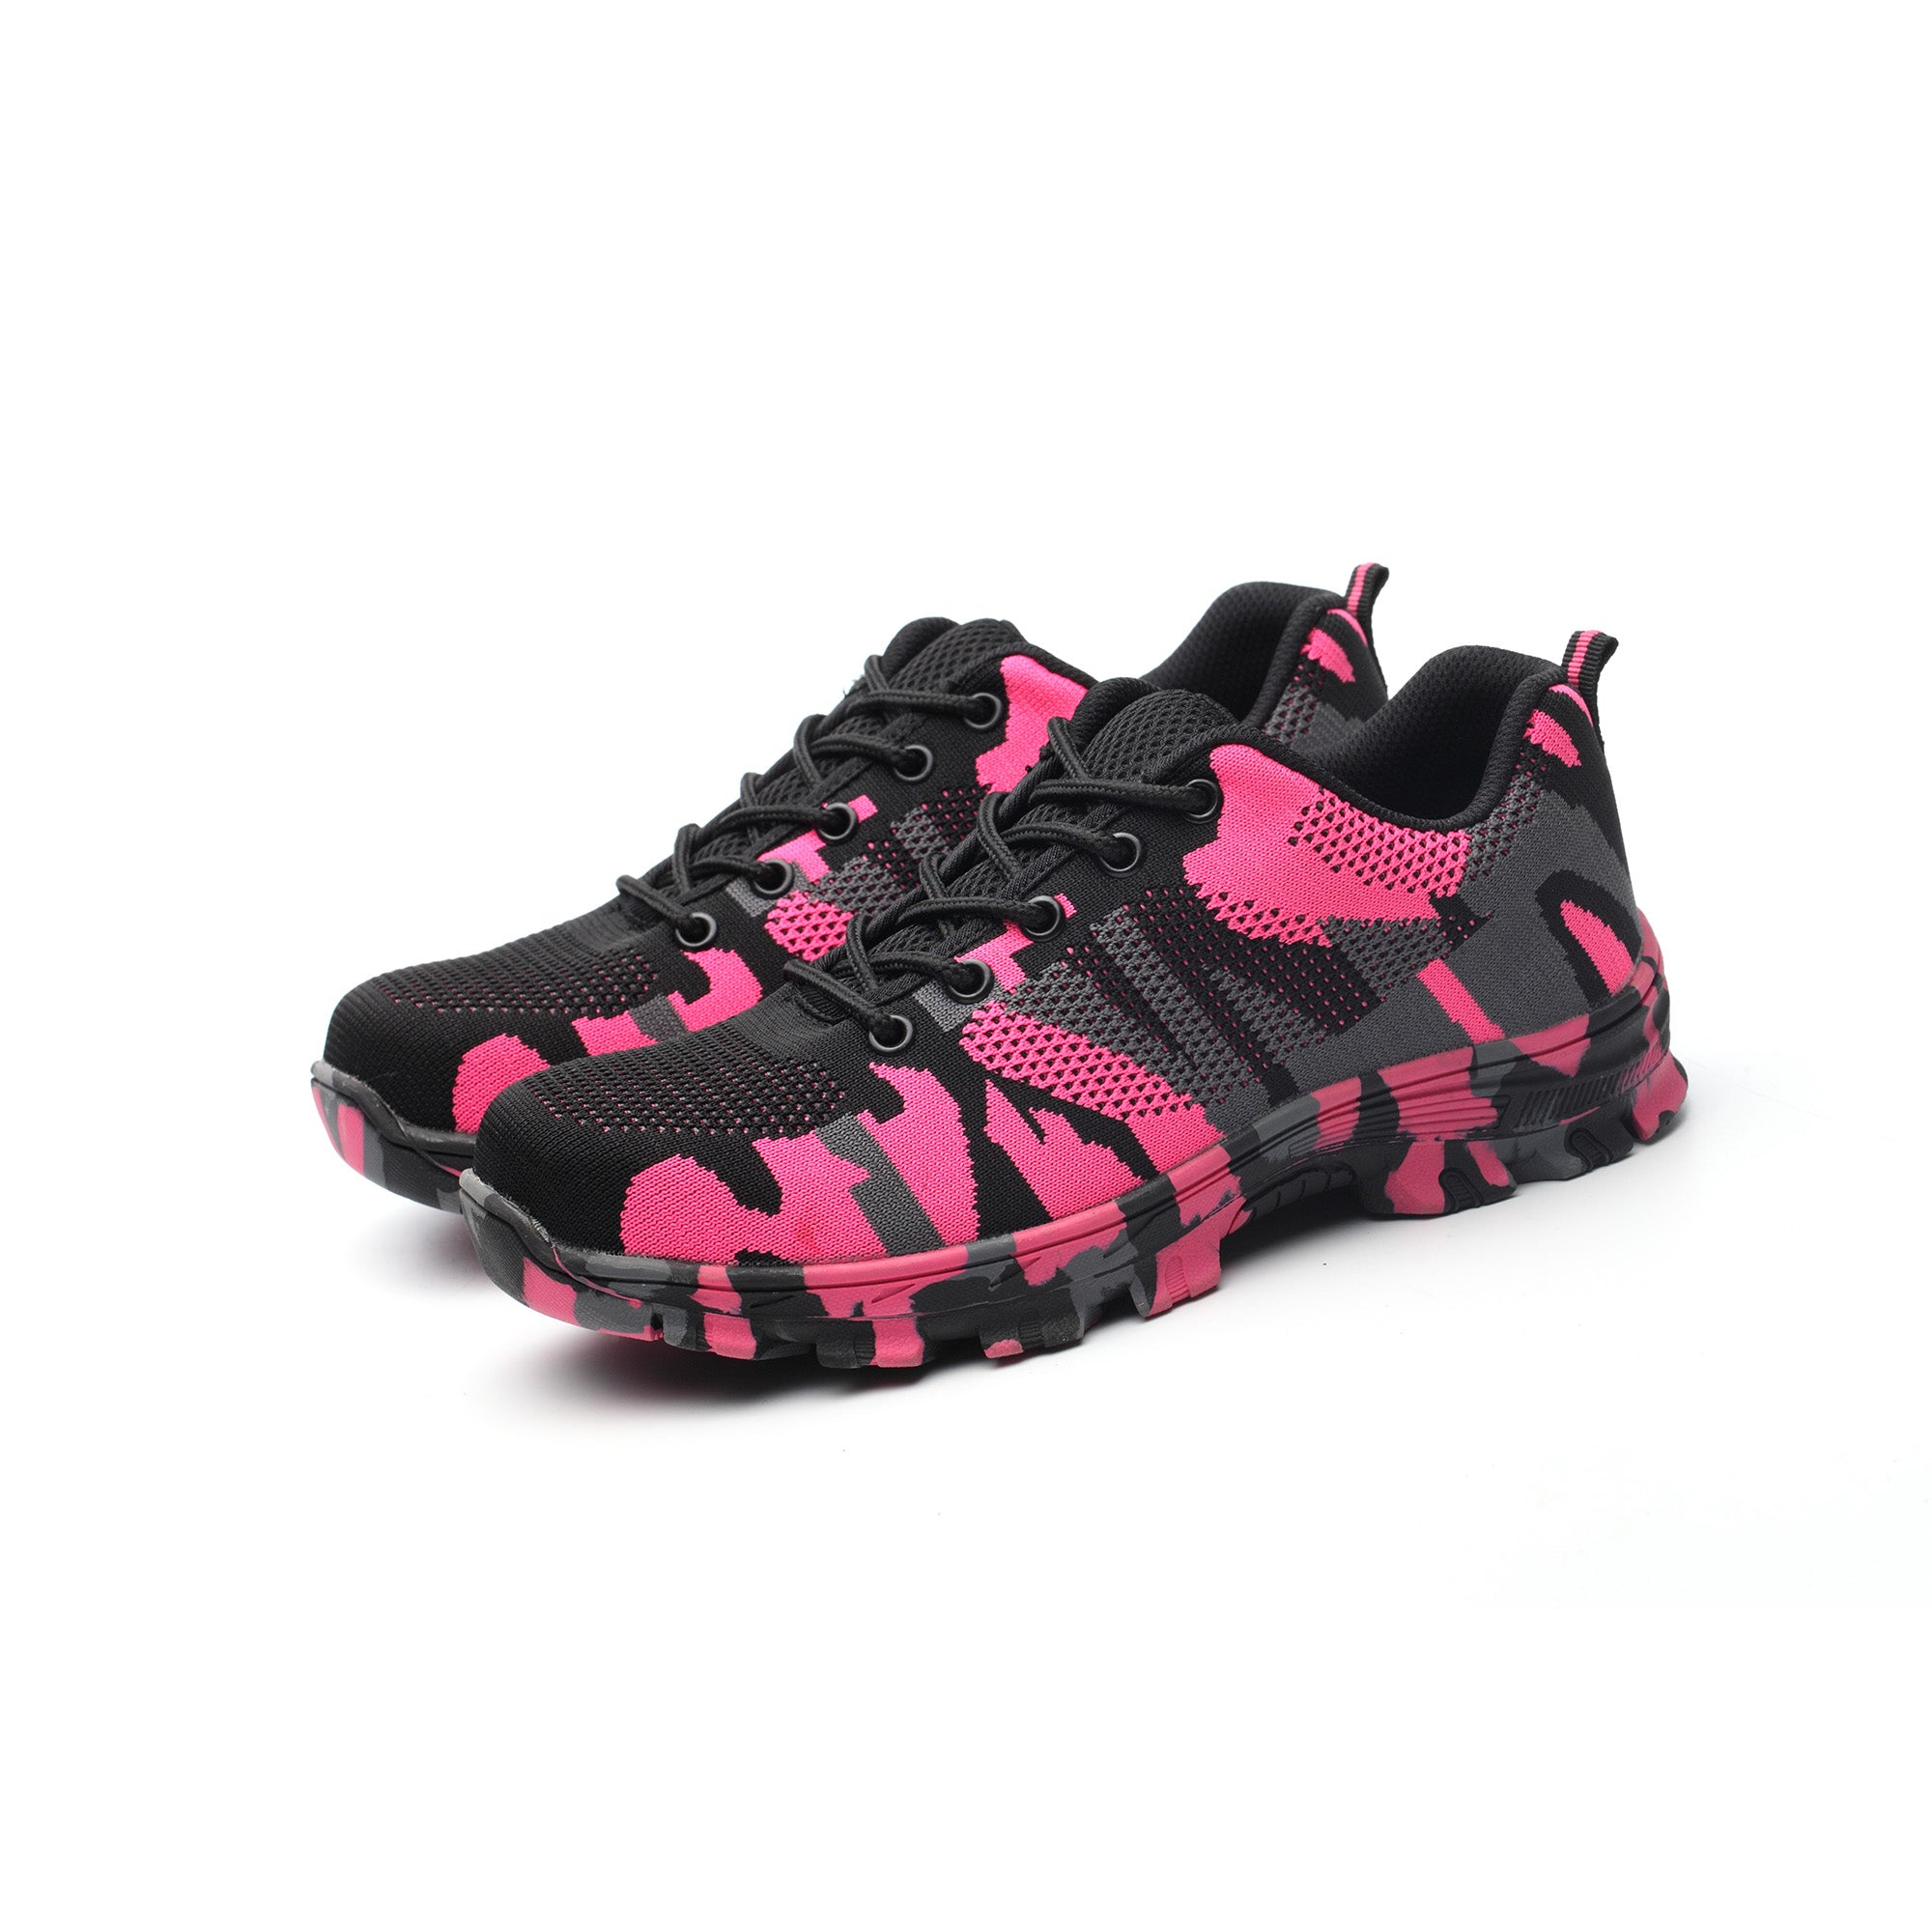 YSK 526: Camo Steel Toe Fashion Shoes (Pink) - YSK (You Should Know) Safety